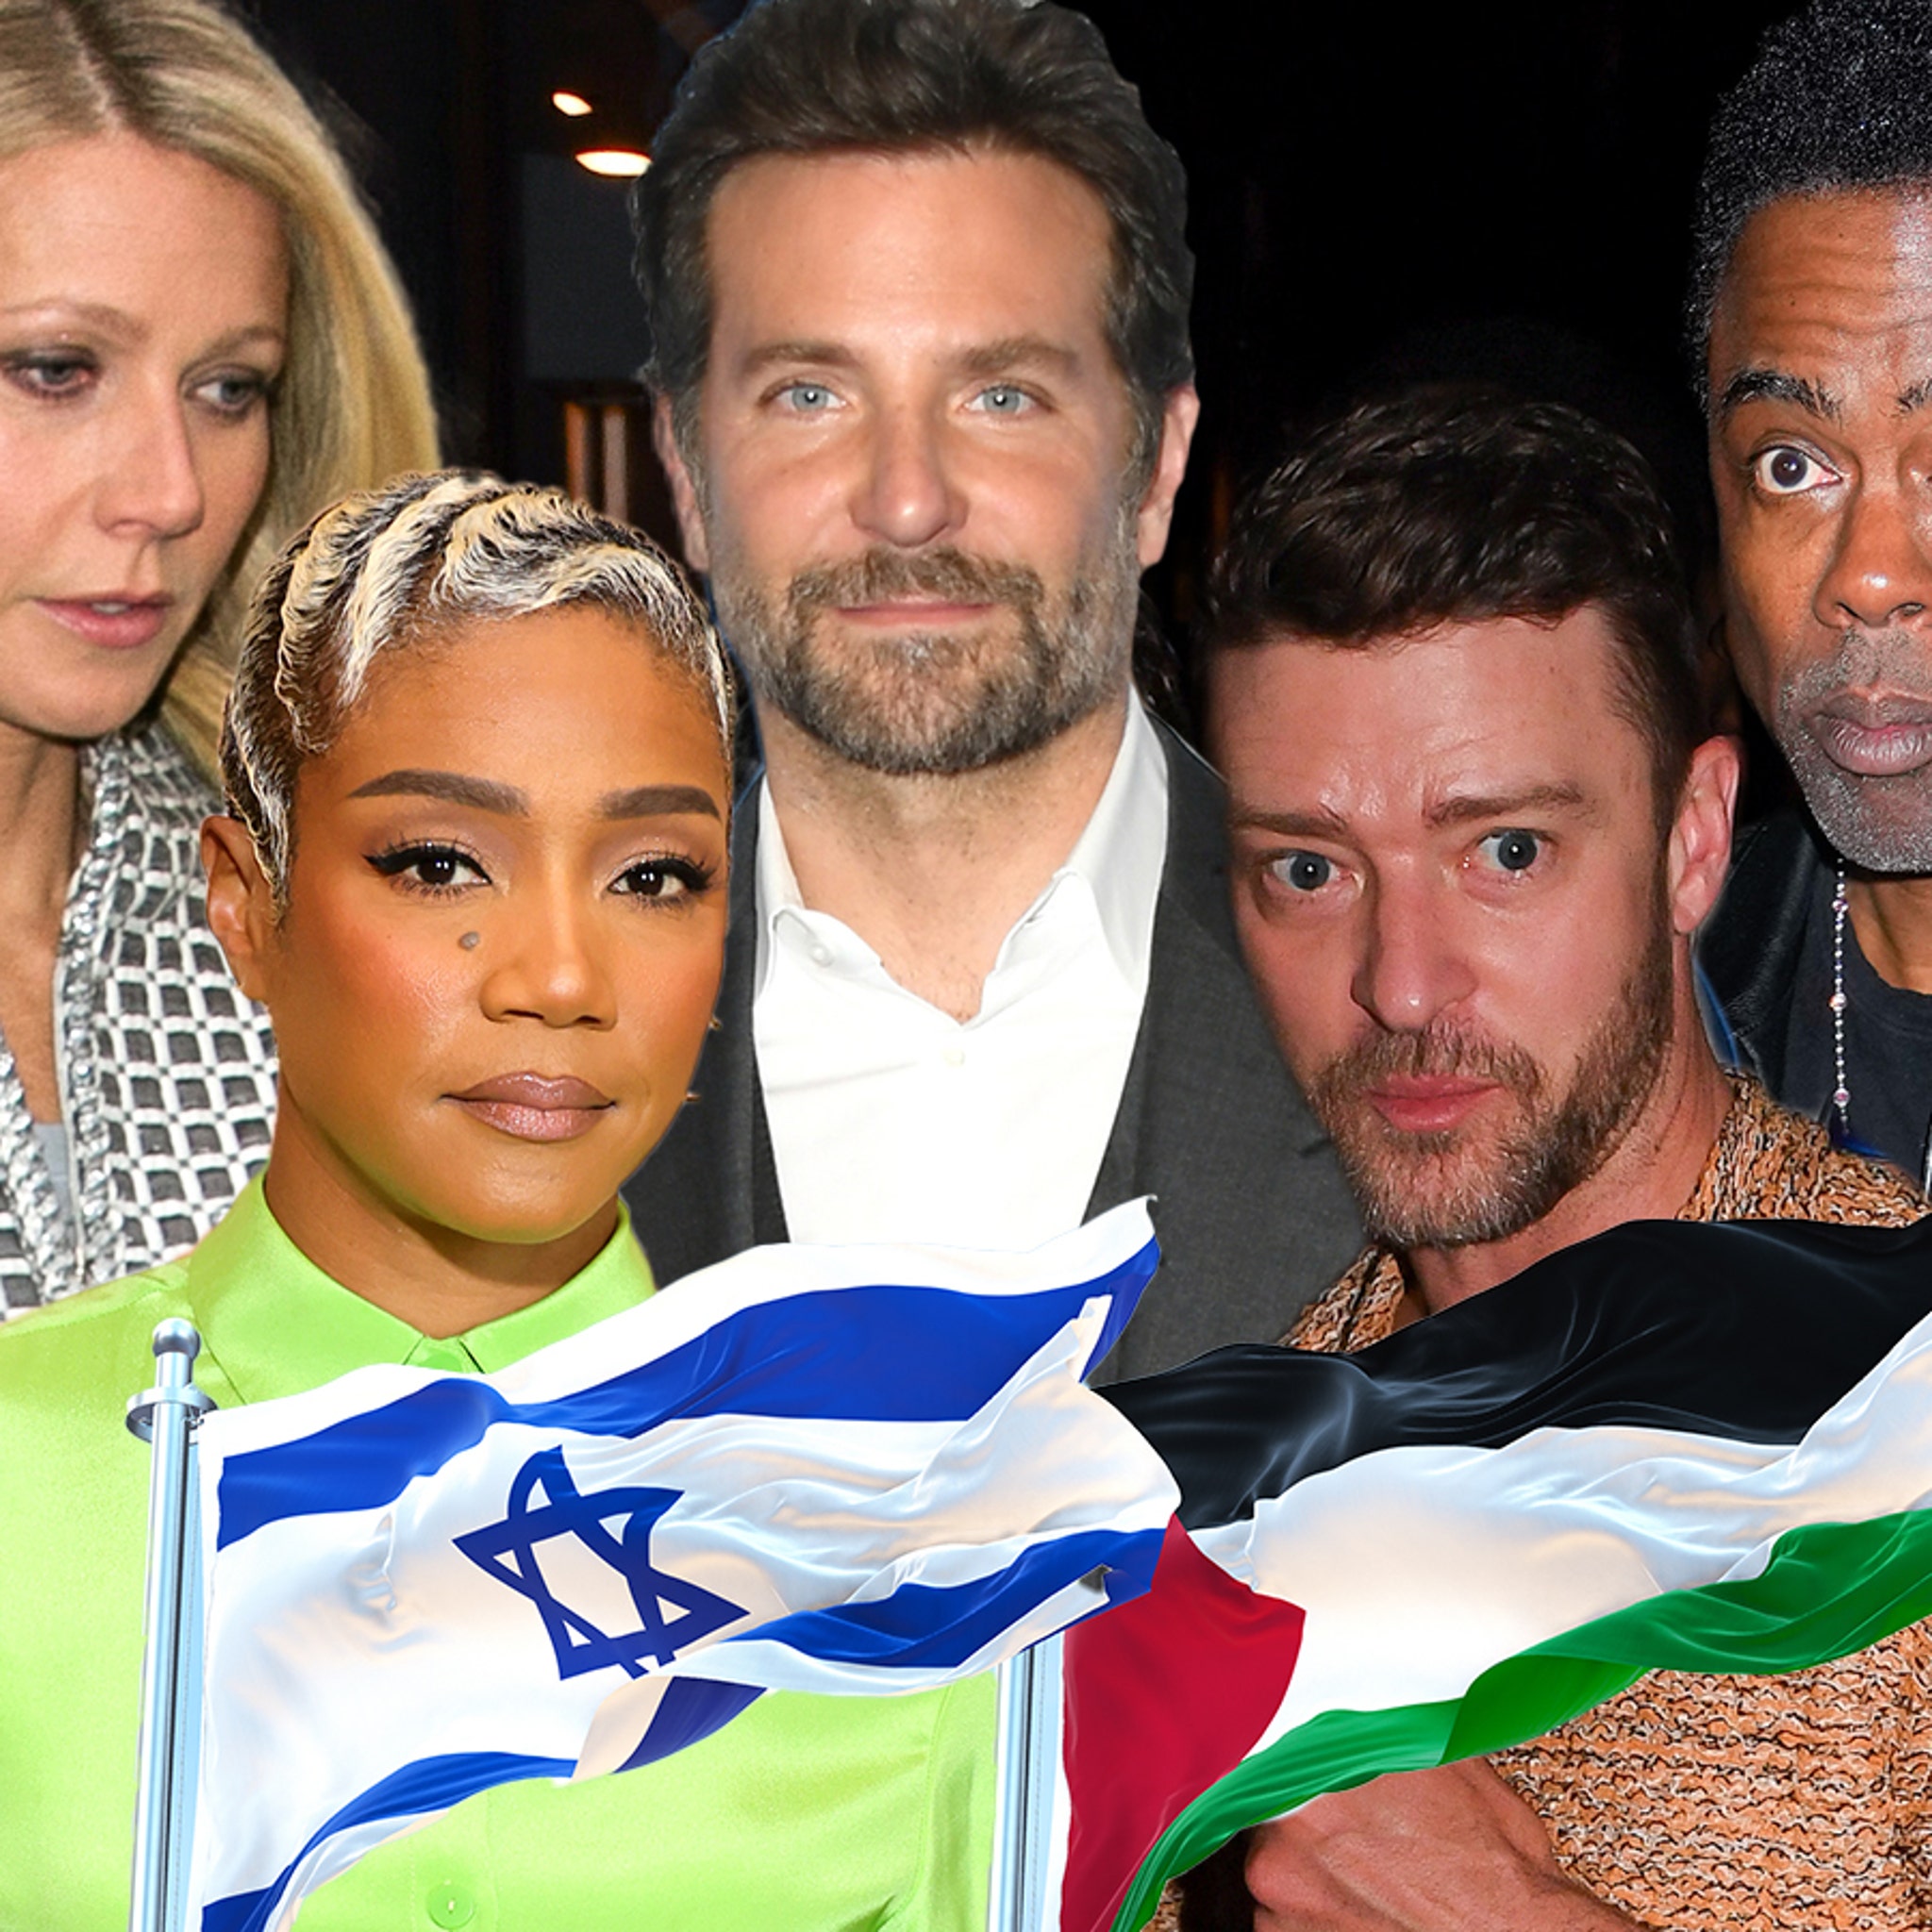 Full List of Celebrities Demanding Release of All Hamas Hostages